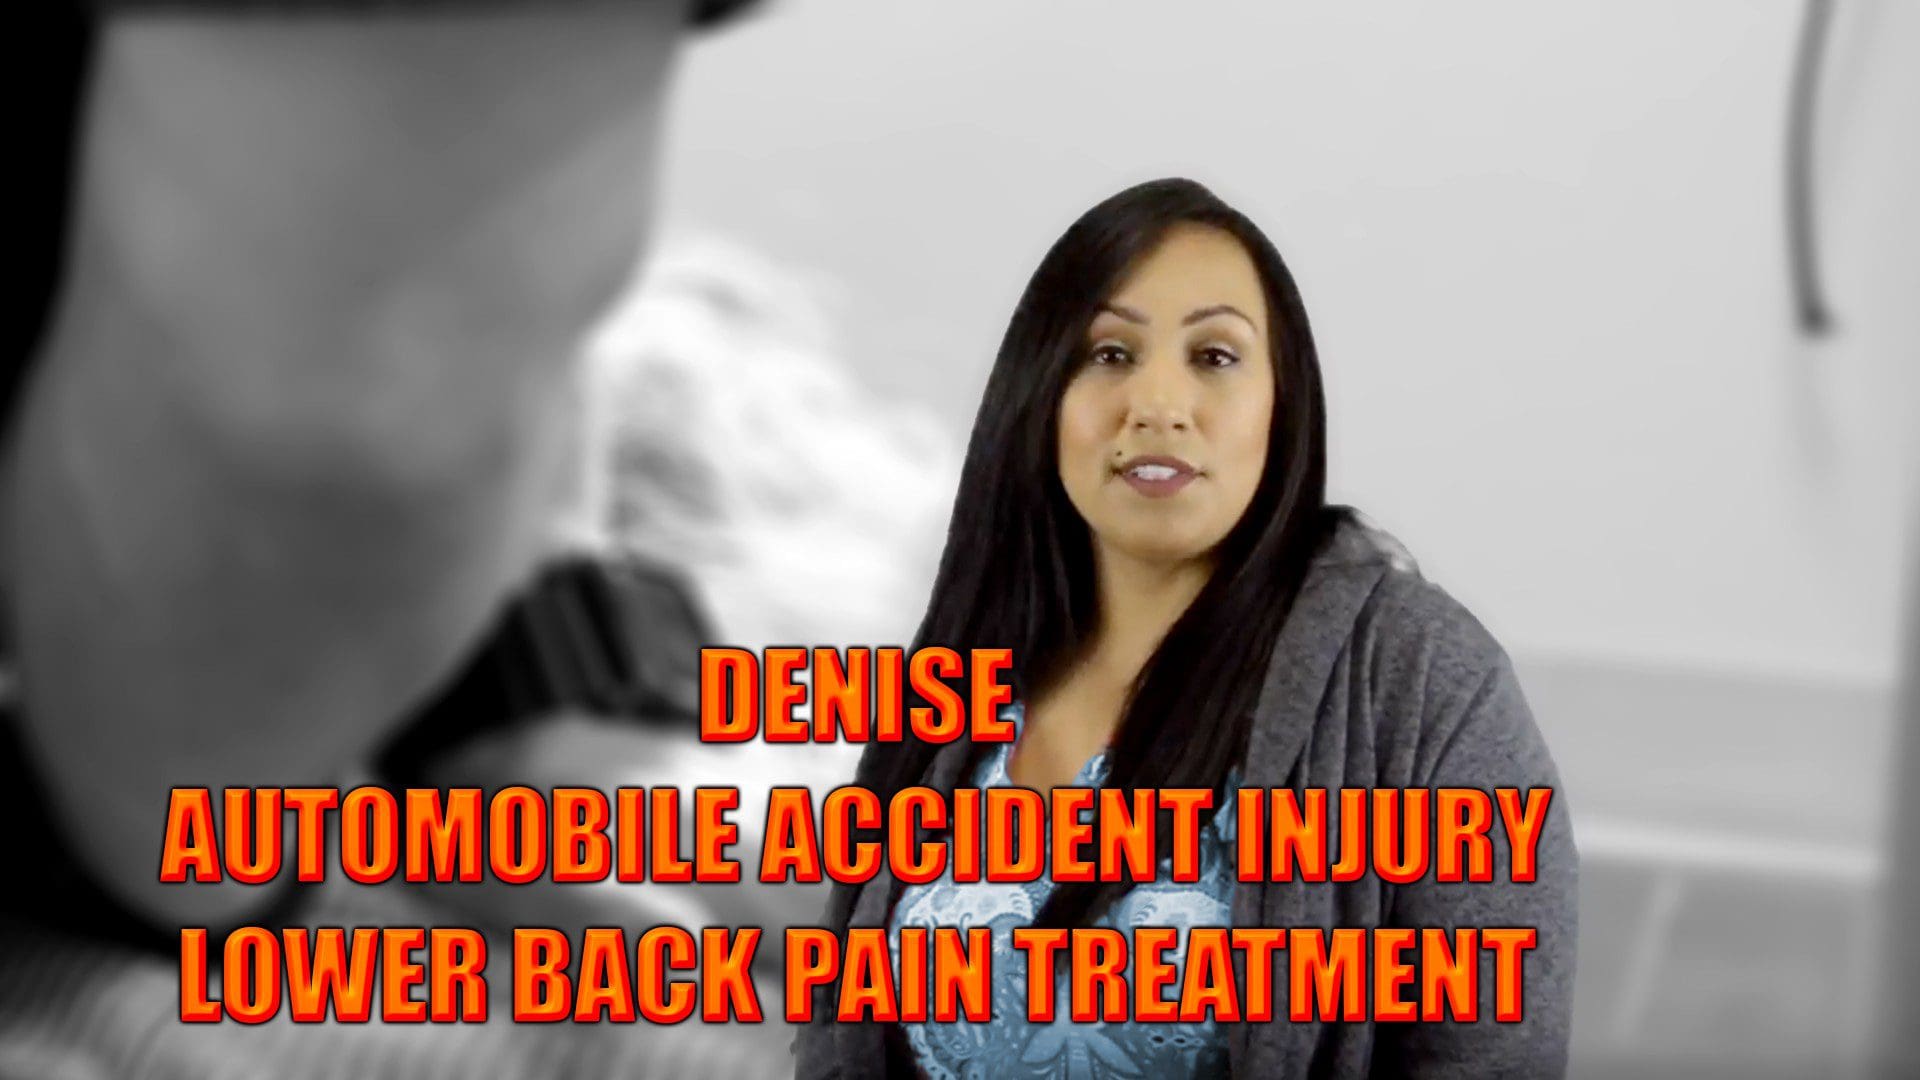 https://pushasrx.com/wp-content/uploads/2018/08/Denise-low-back-pain-treatment.jpg